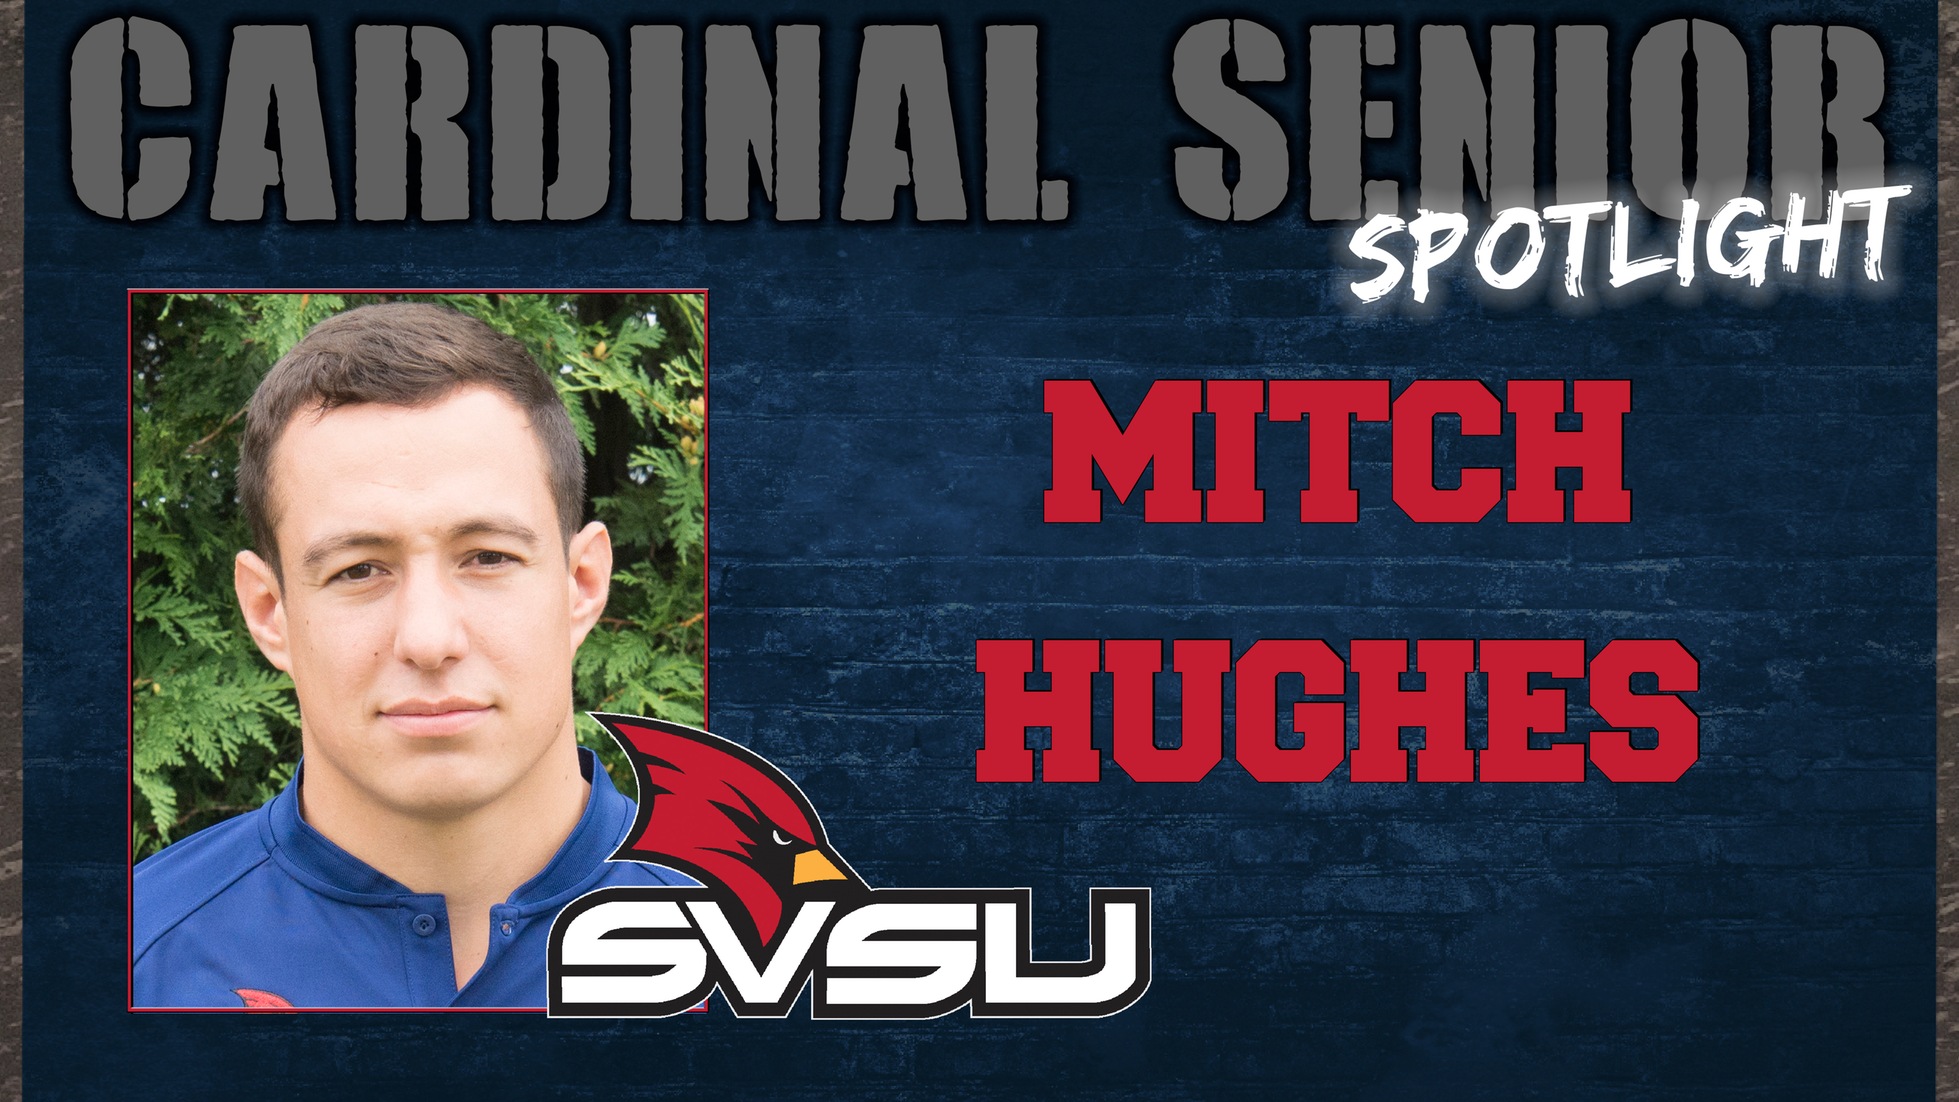 SVSU Cardinal Senior Spotlight - Mitch Hughes